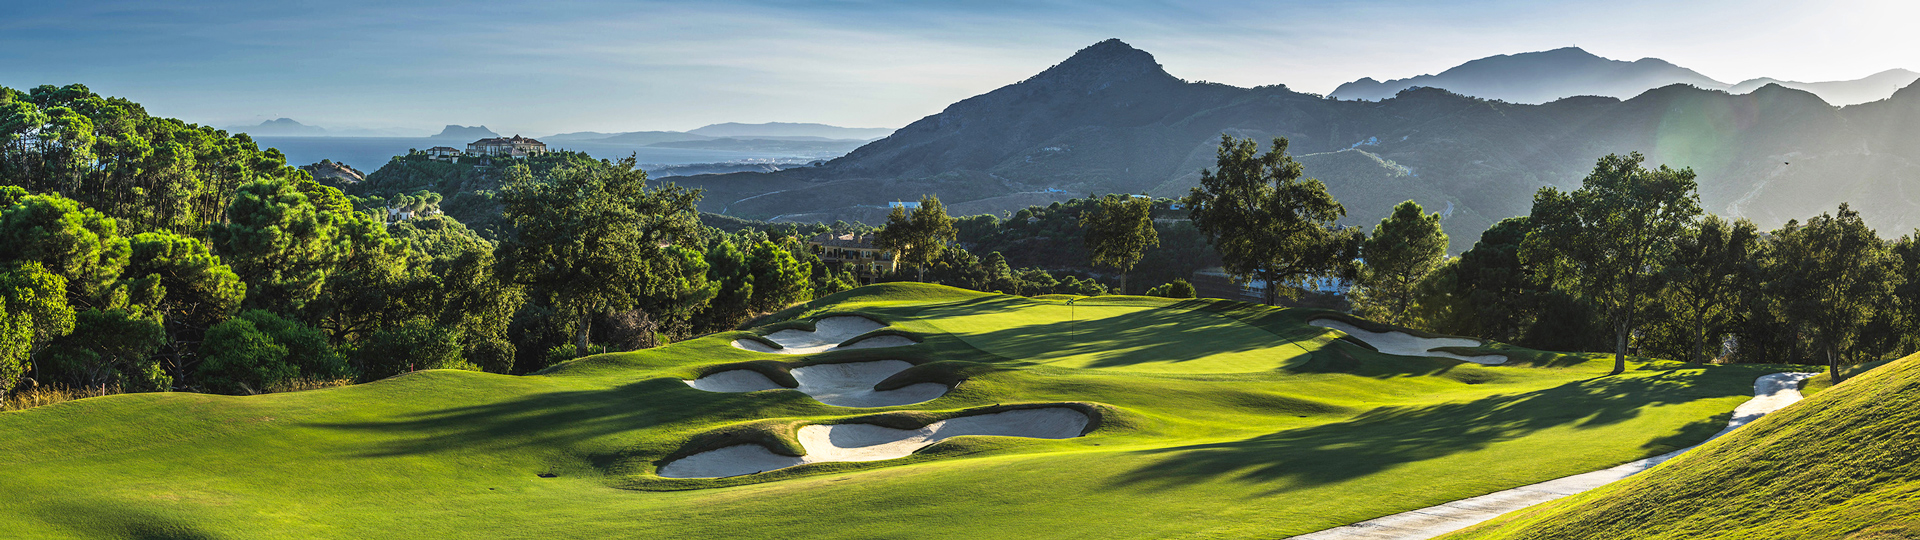 La Zagaleta golf course in Malaga, Andalusia